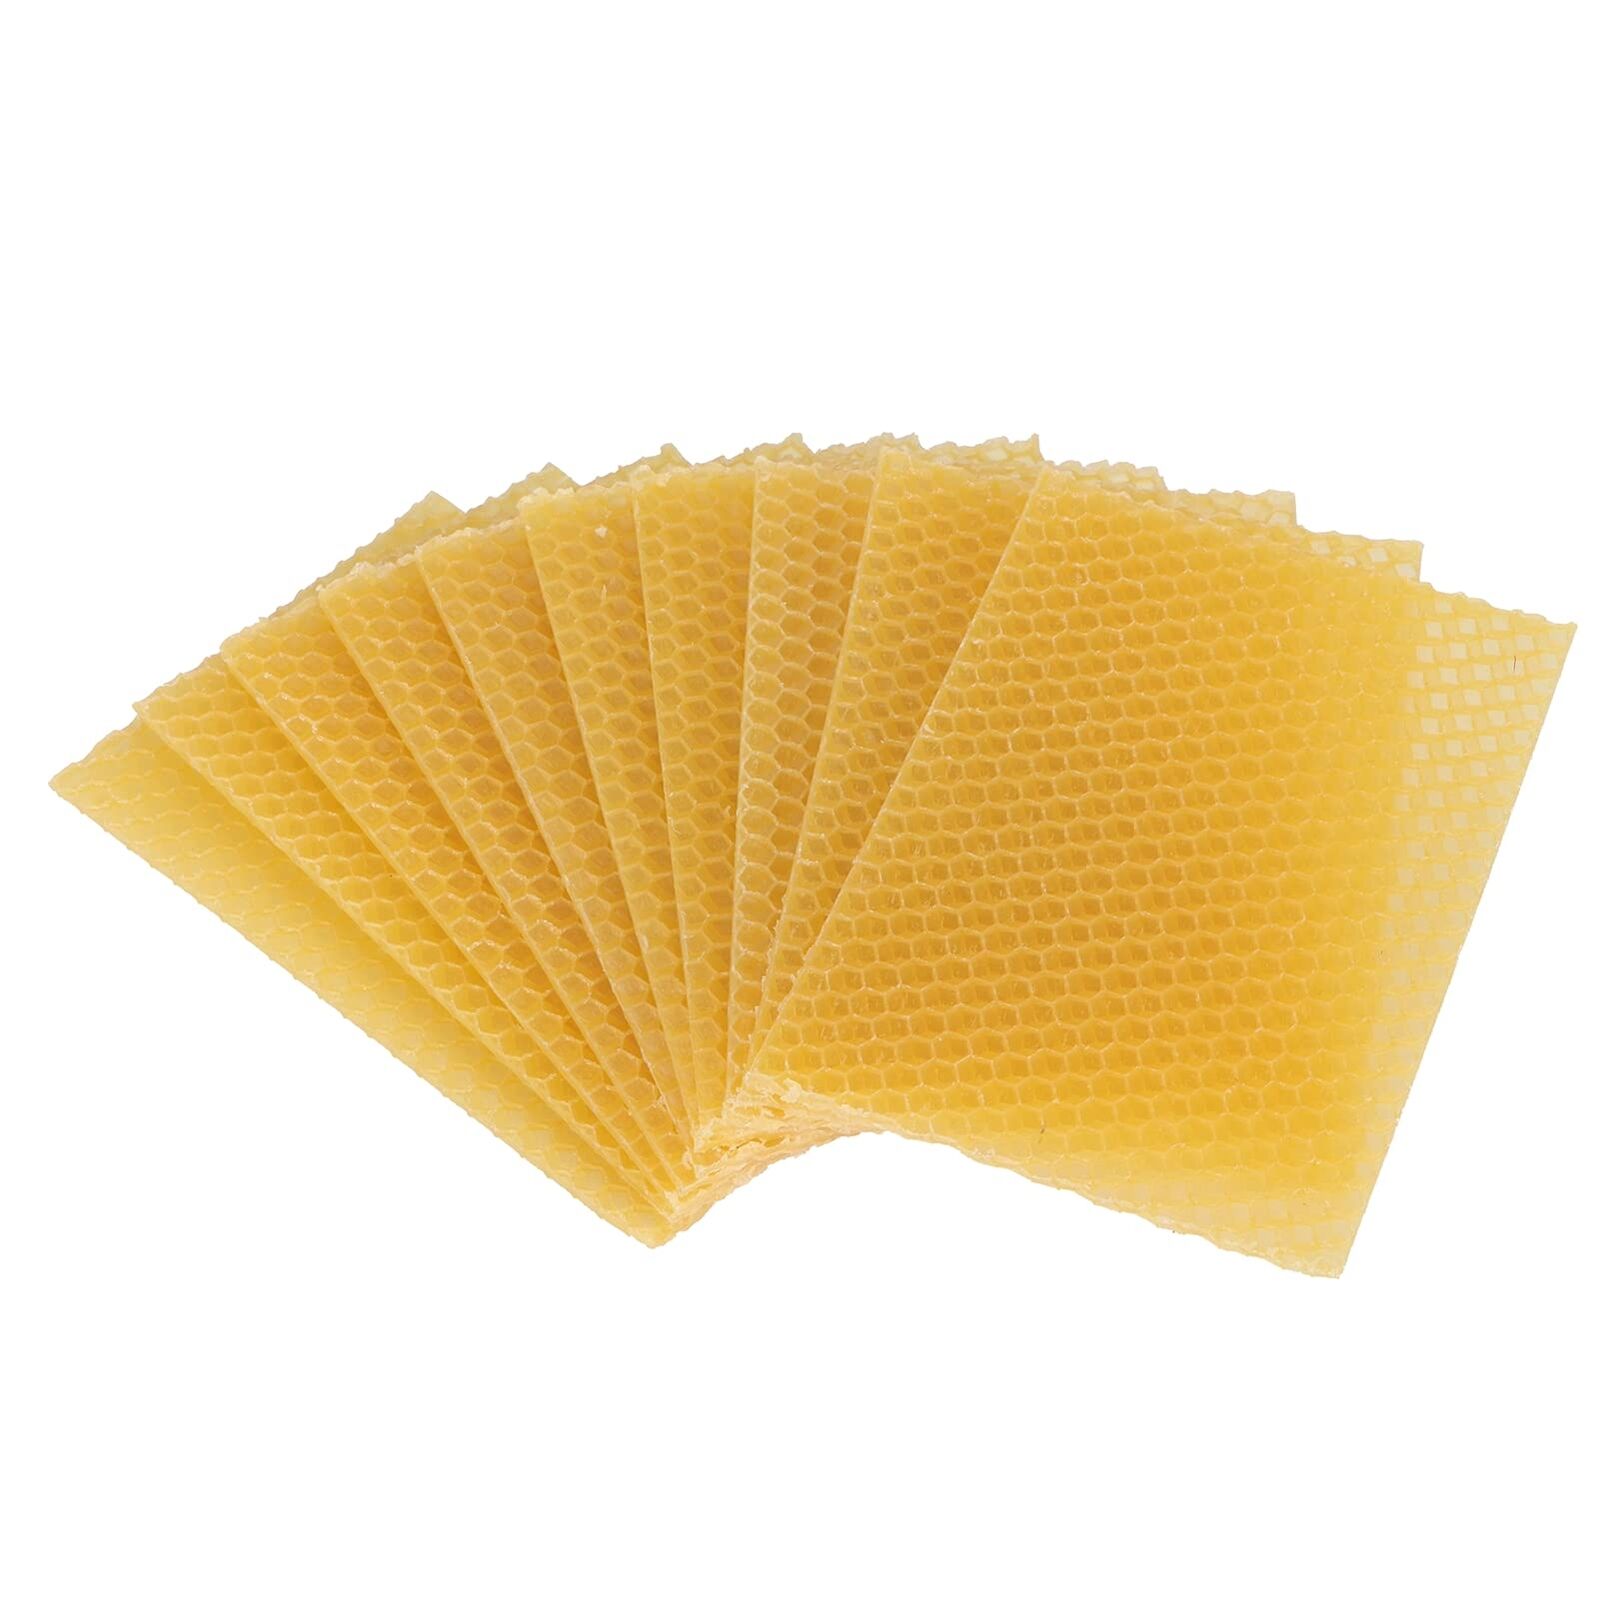 10pcs Beeswax Honeycomb Sheets Wax Foundation Beekeeping Sheet